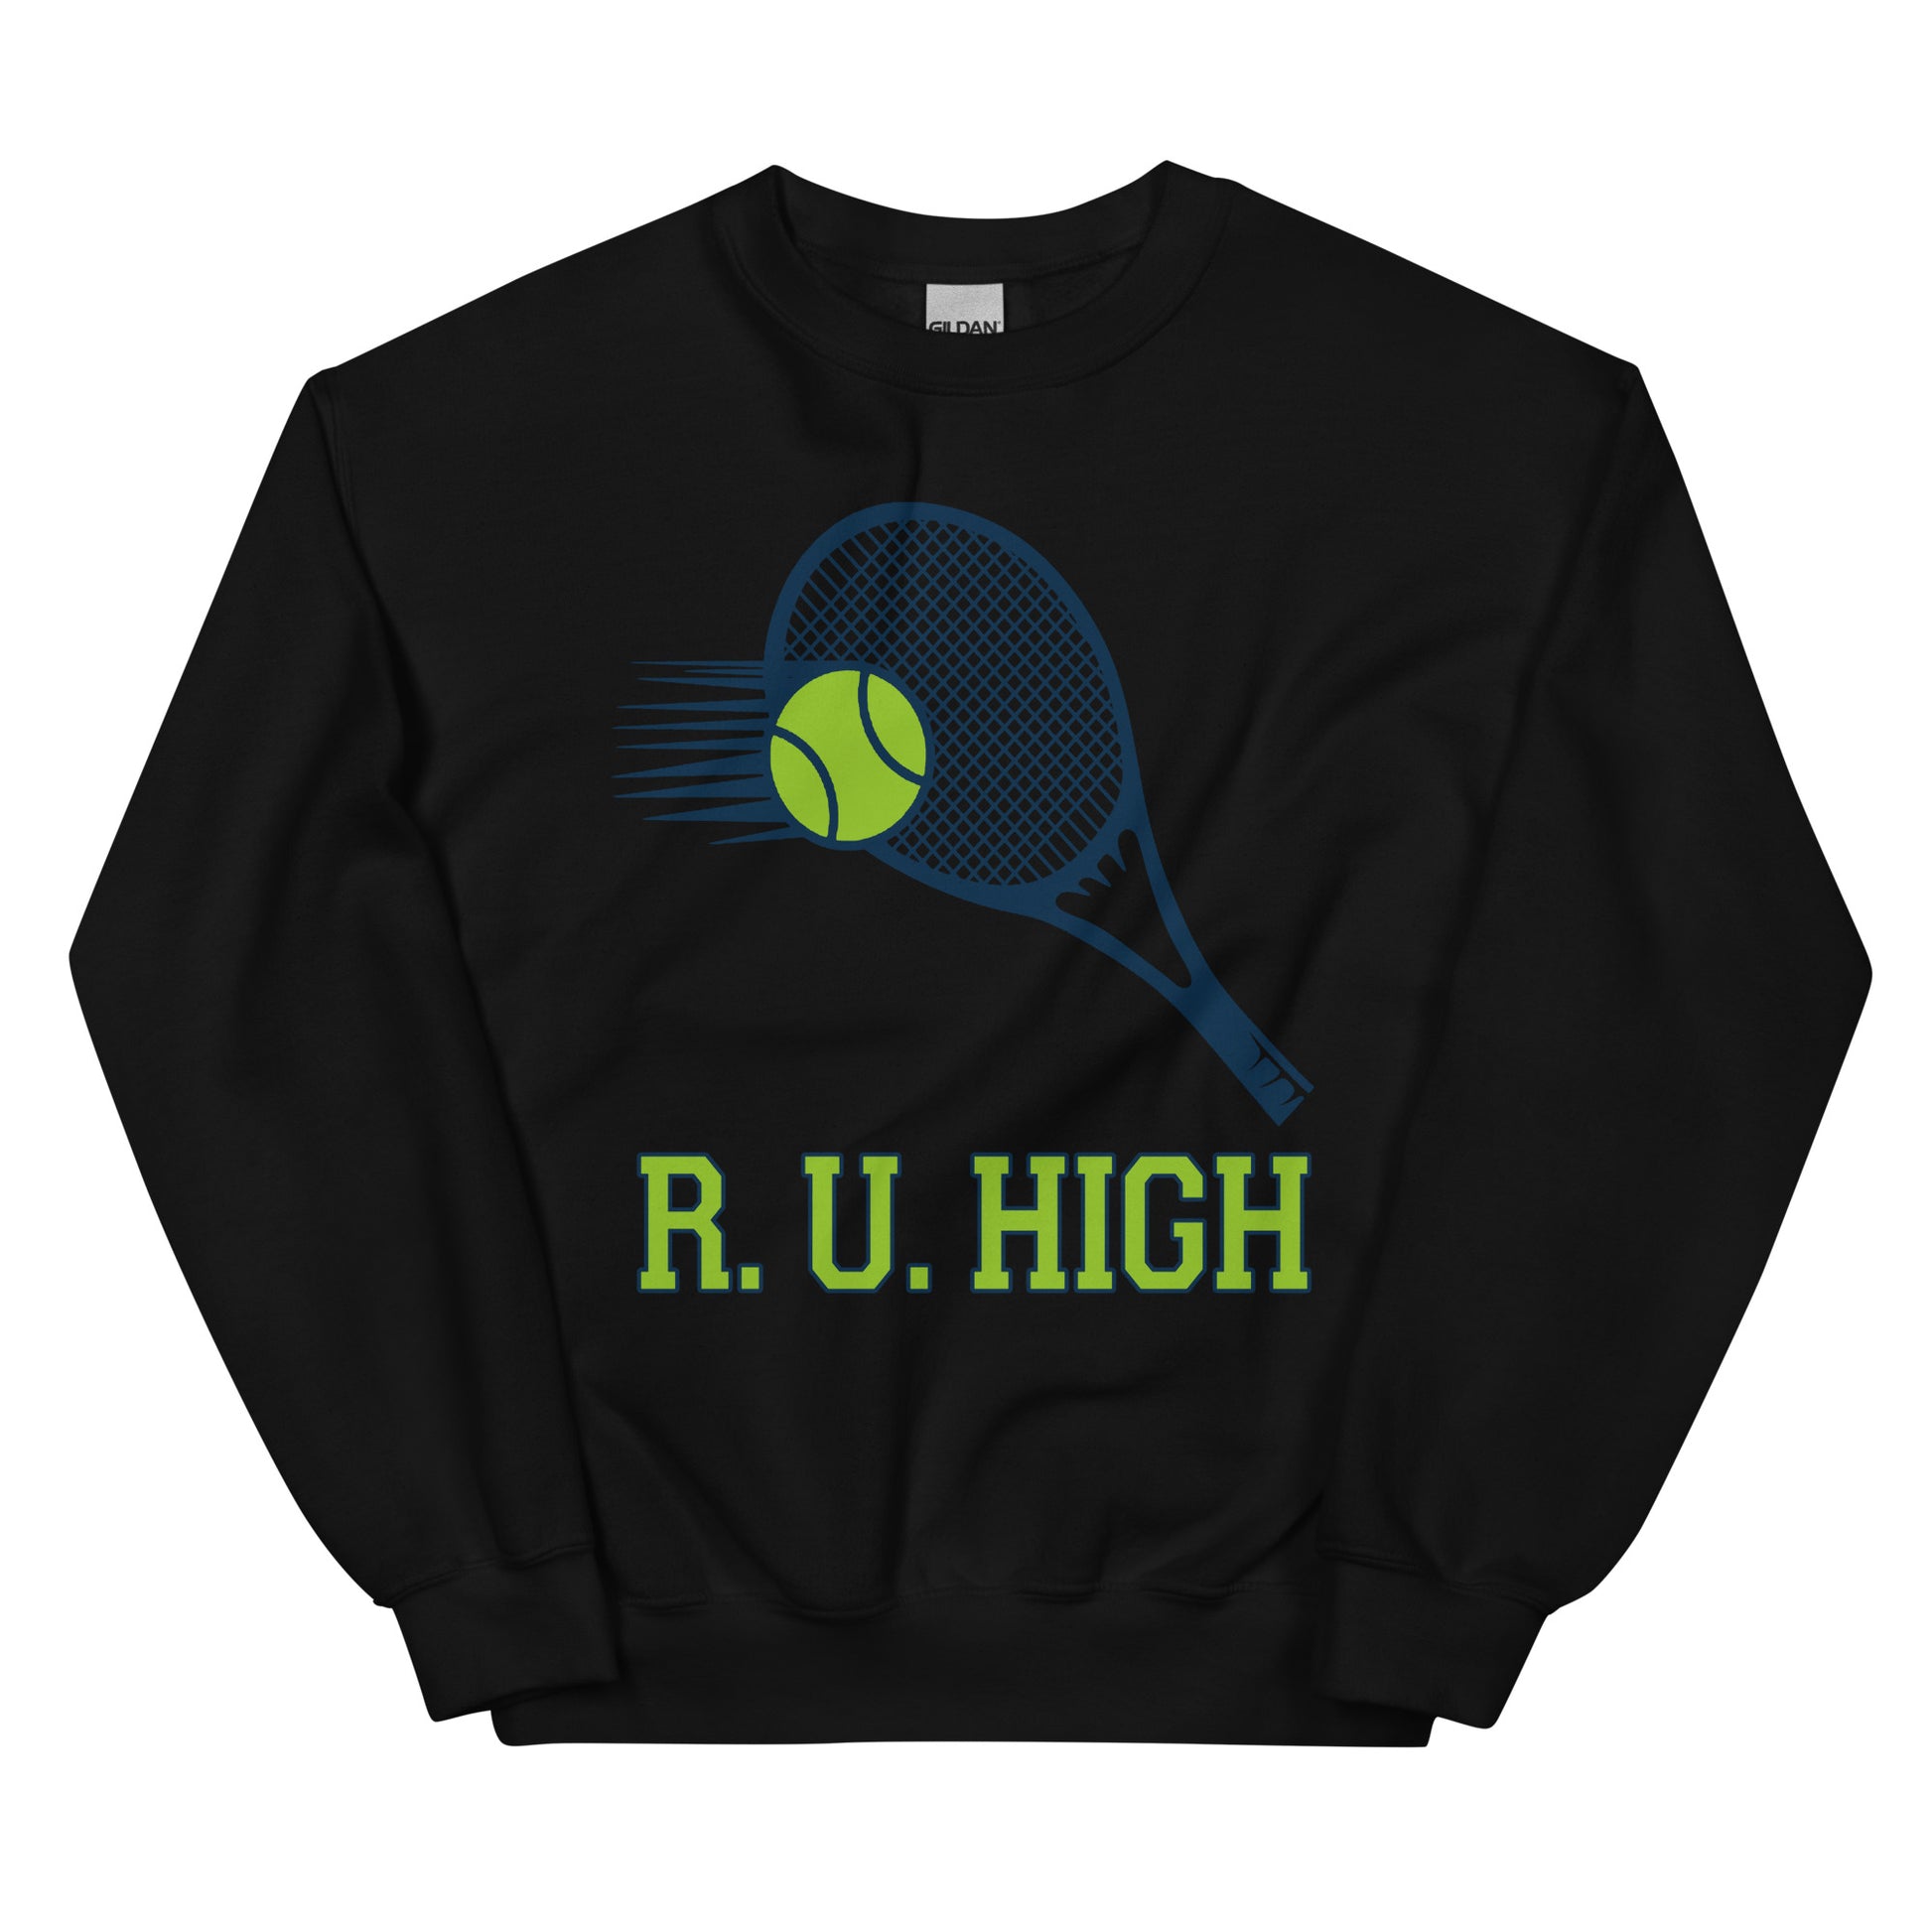 R. U. High Tennis printed crewneck sweatshirt by Whistler Shirts